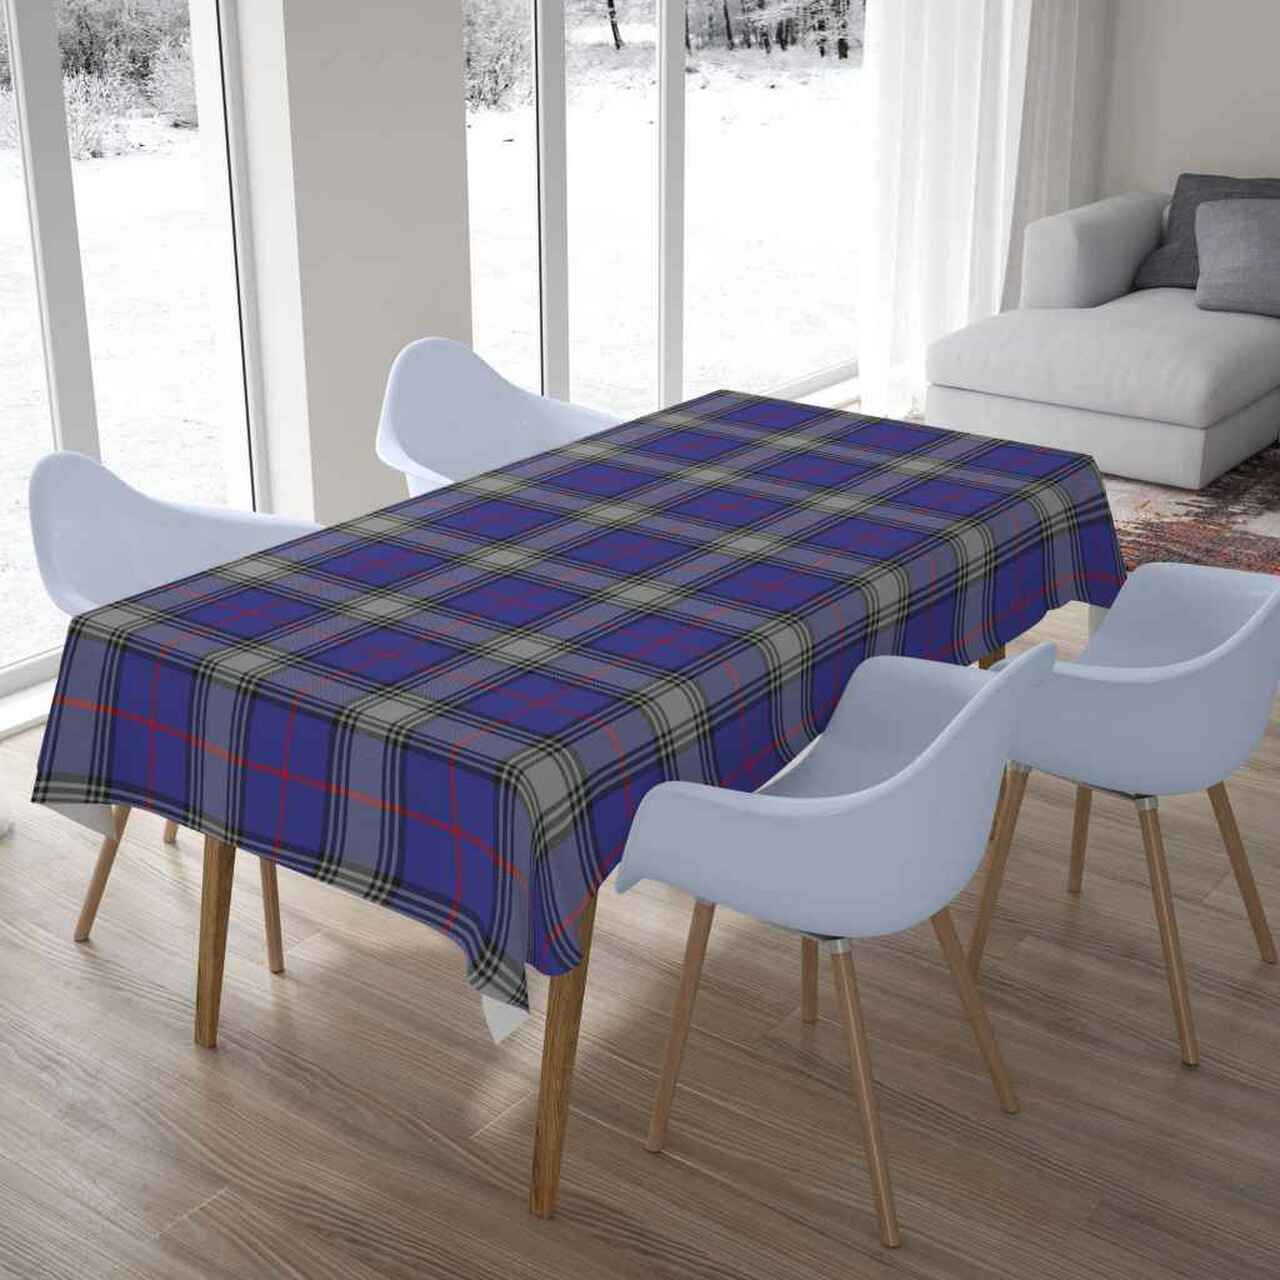 Kinnaird Tartan Tablecloth